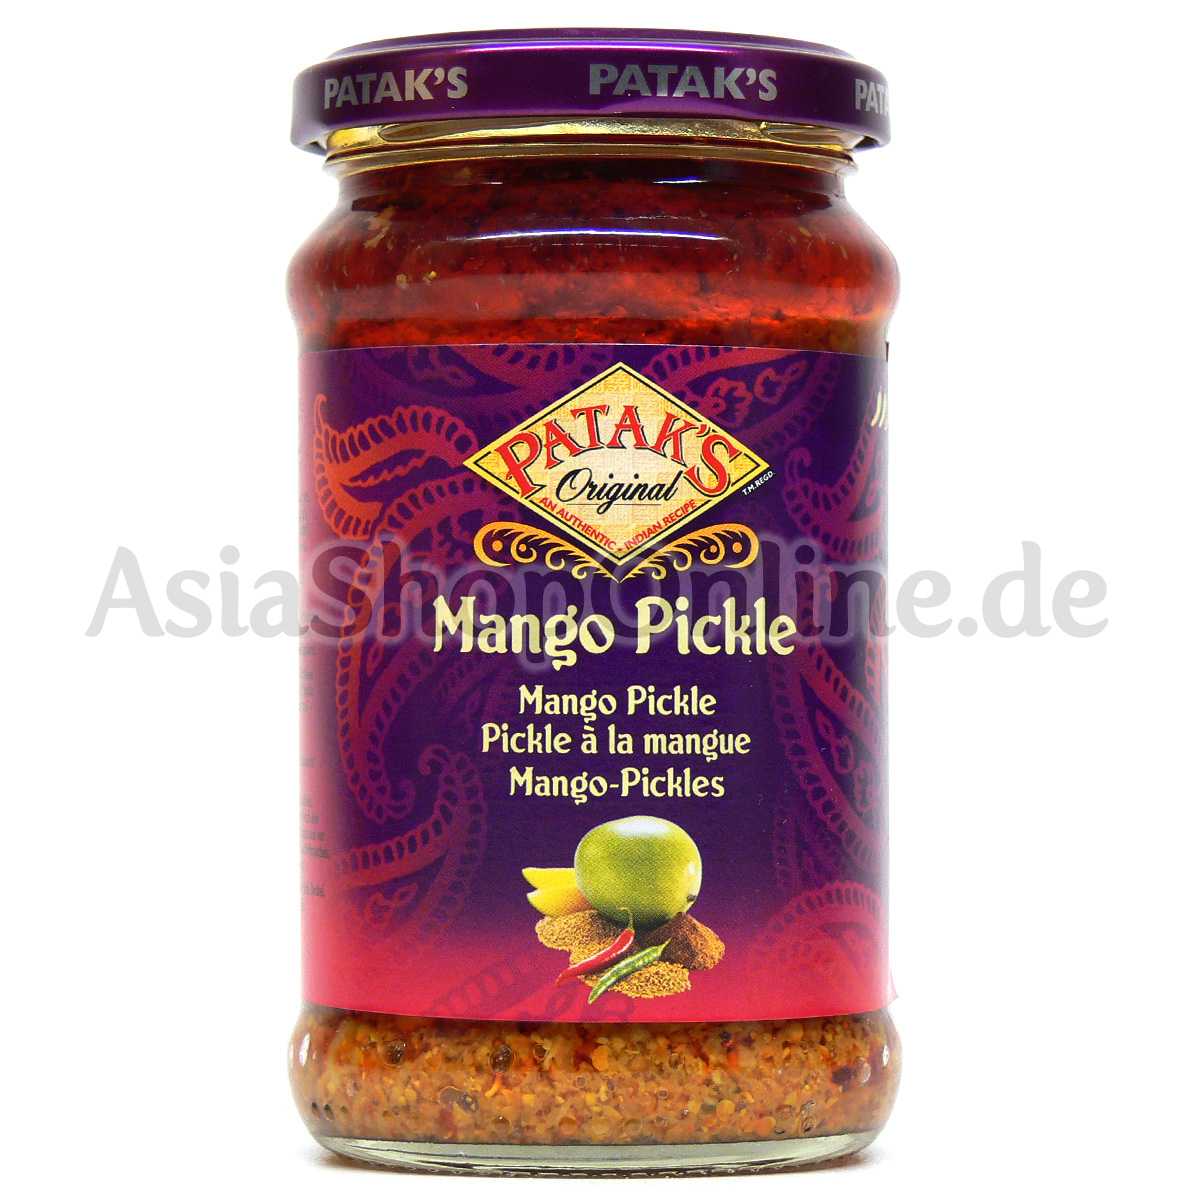 Mango Pickle - Pataks - 283g